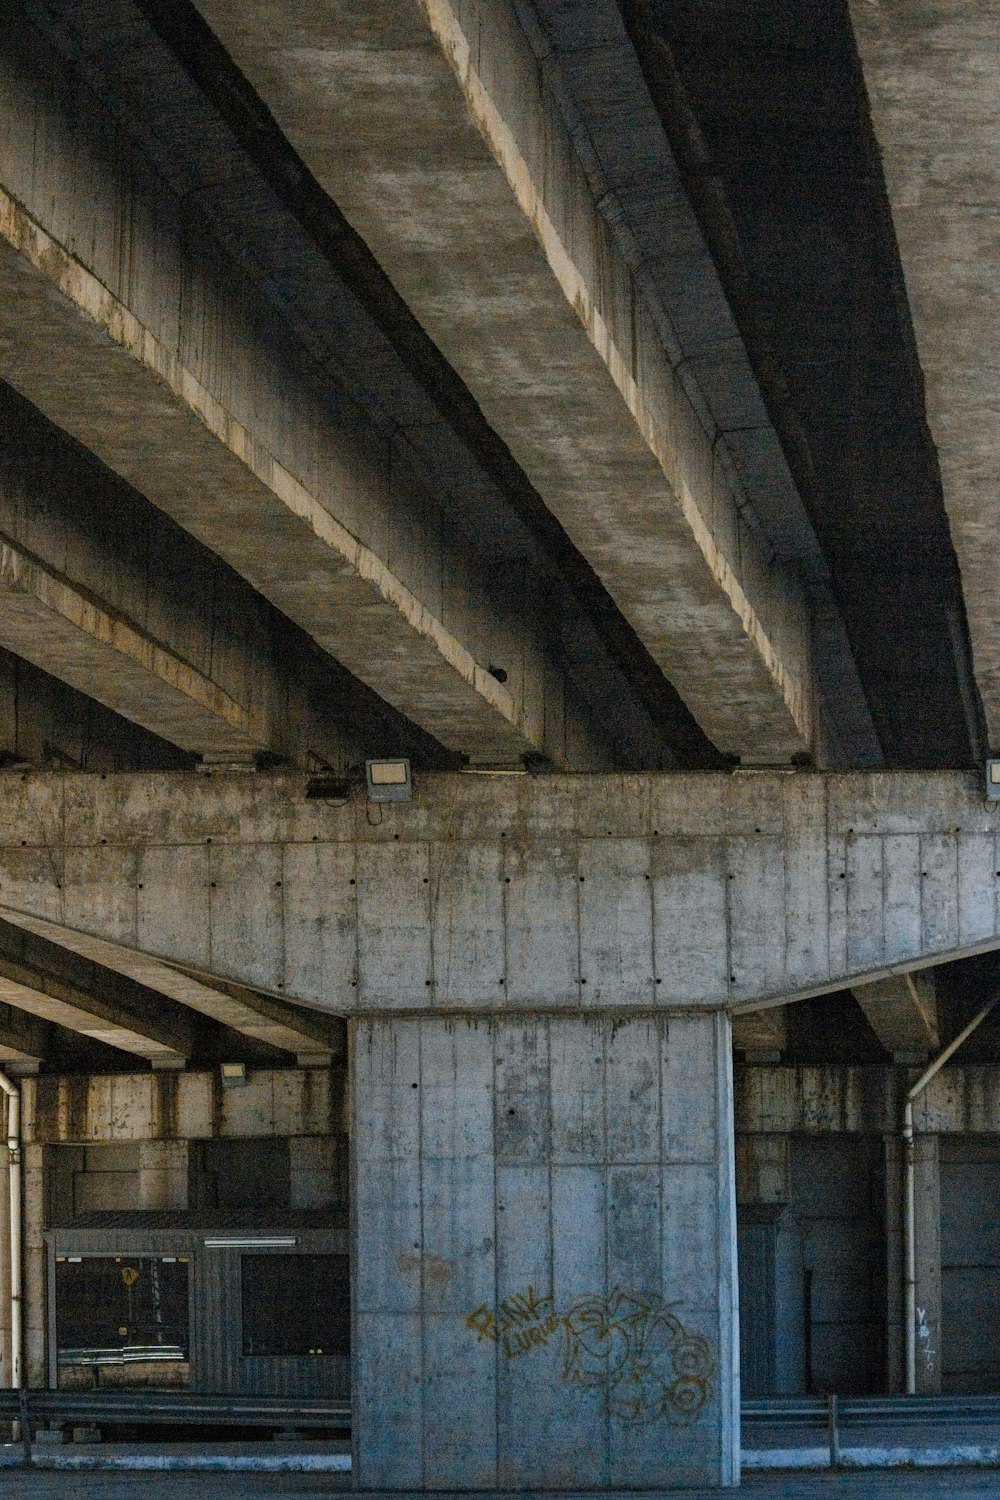 an empty parking garage under a bridge with graffiti on the walls